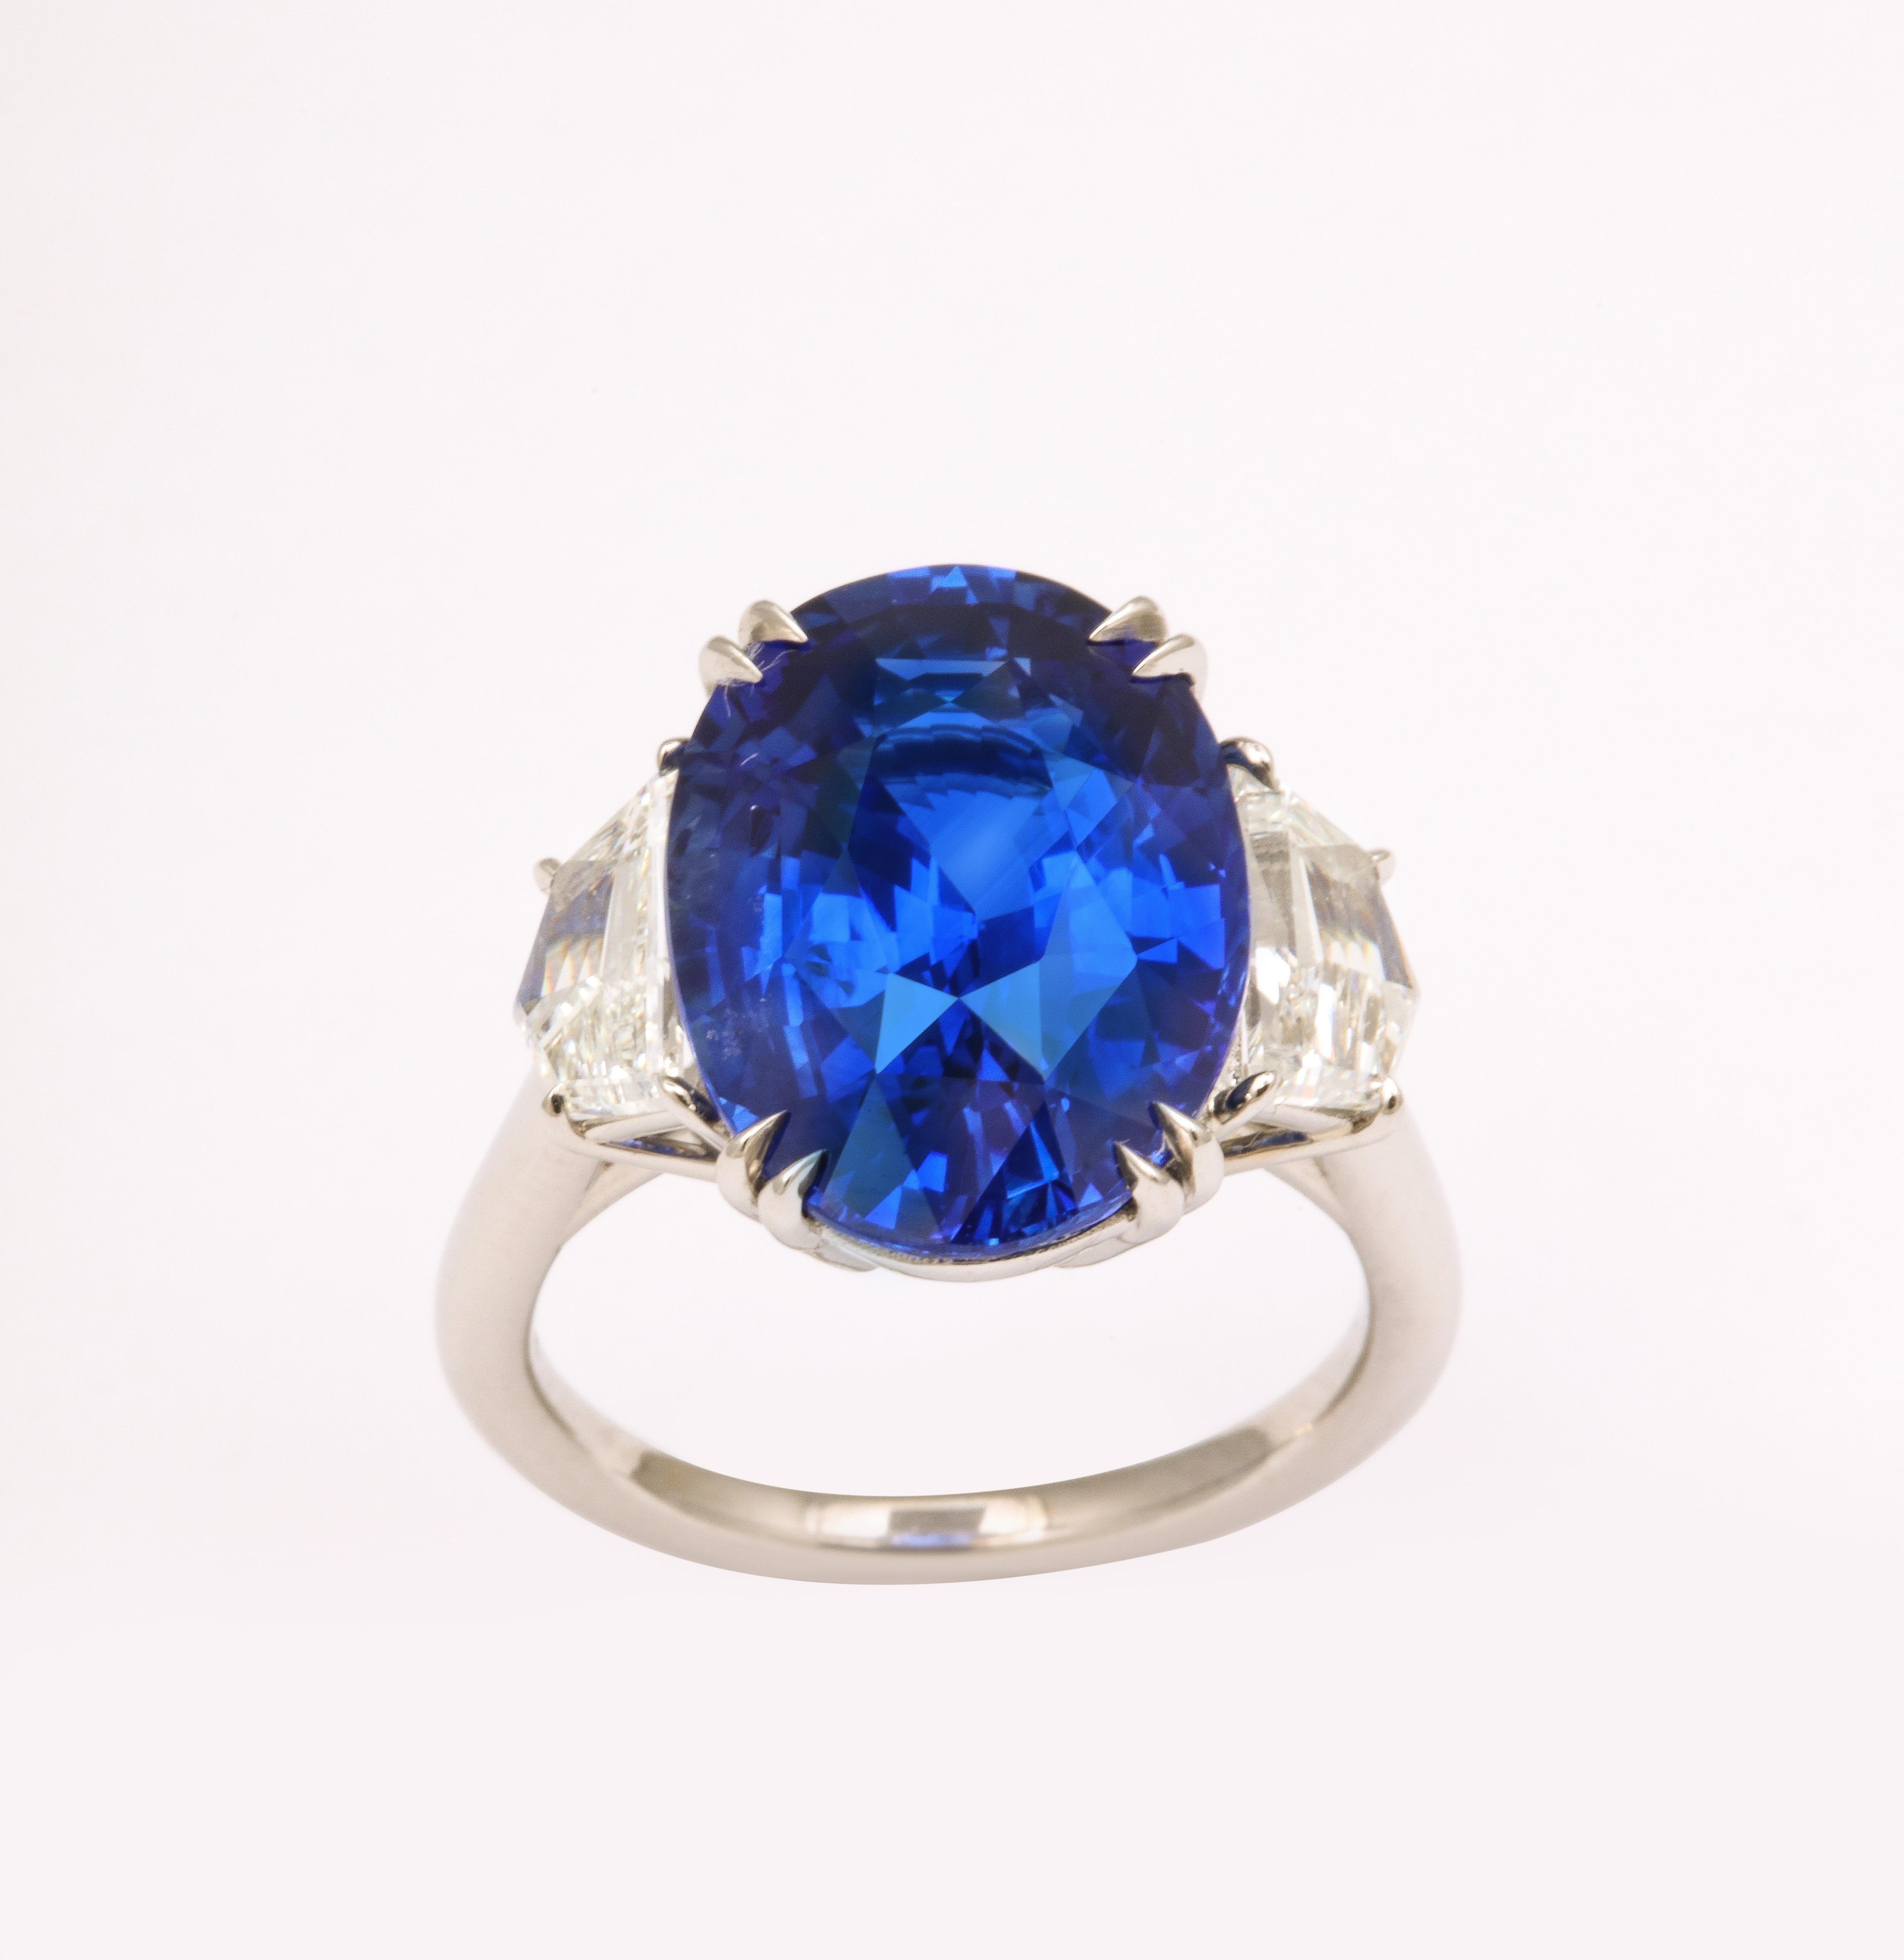 10 Carat Vivid Blue Sapphire and Diamond Ring